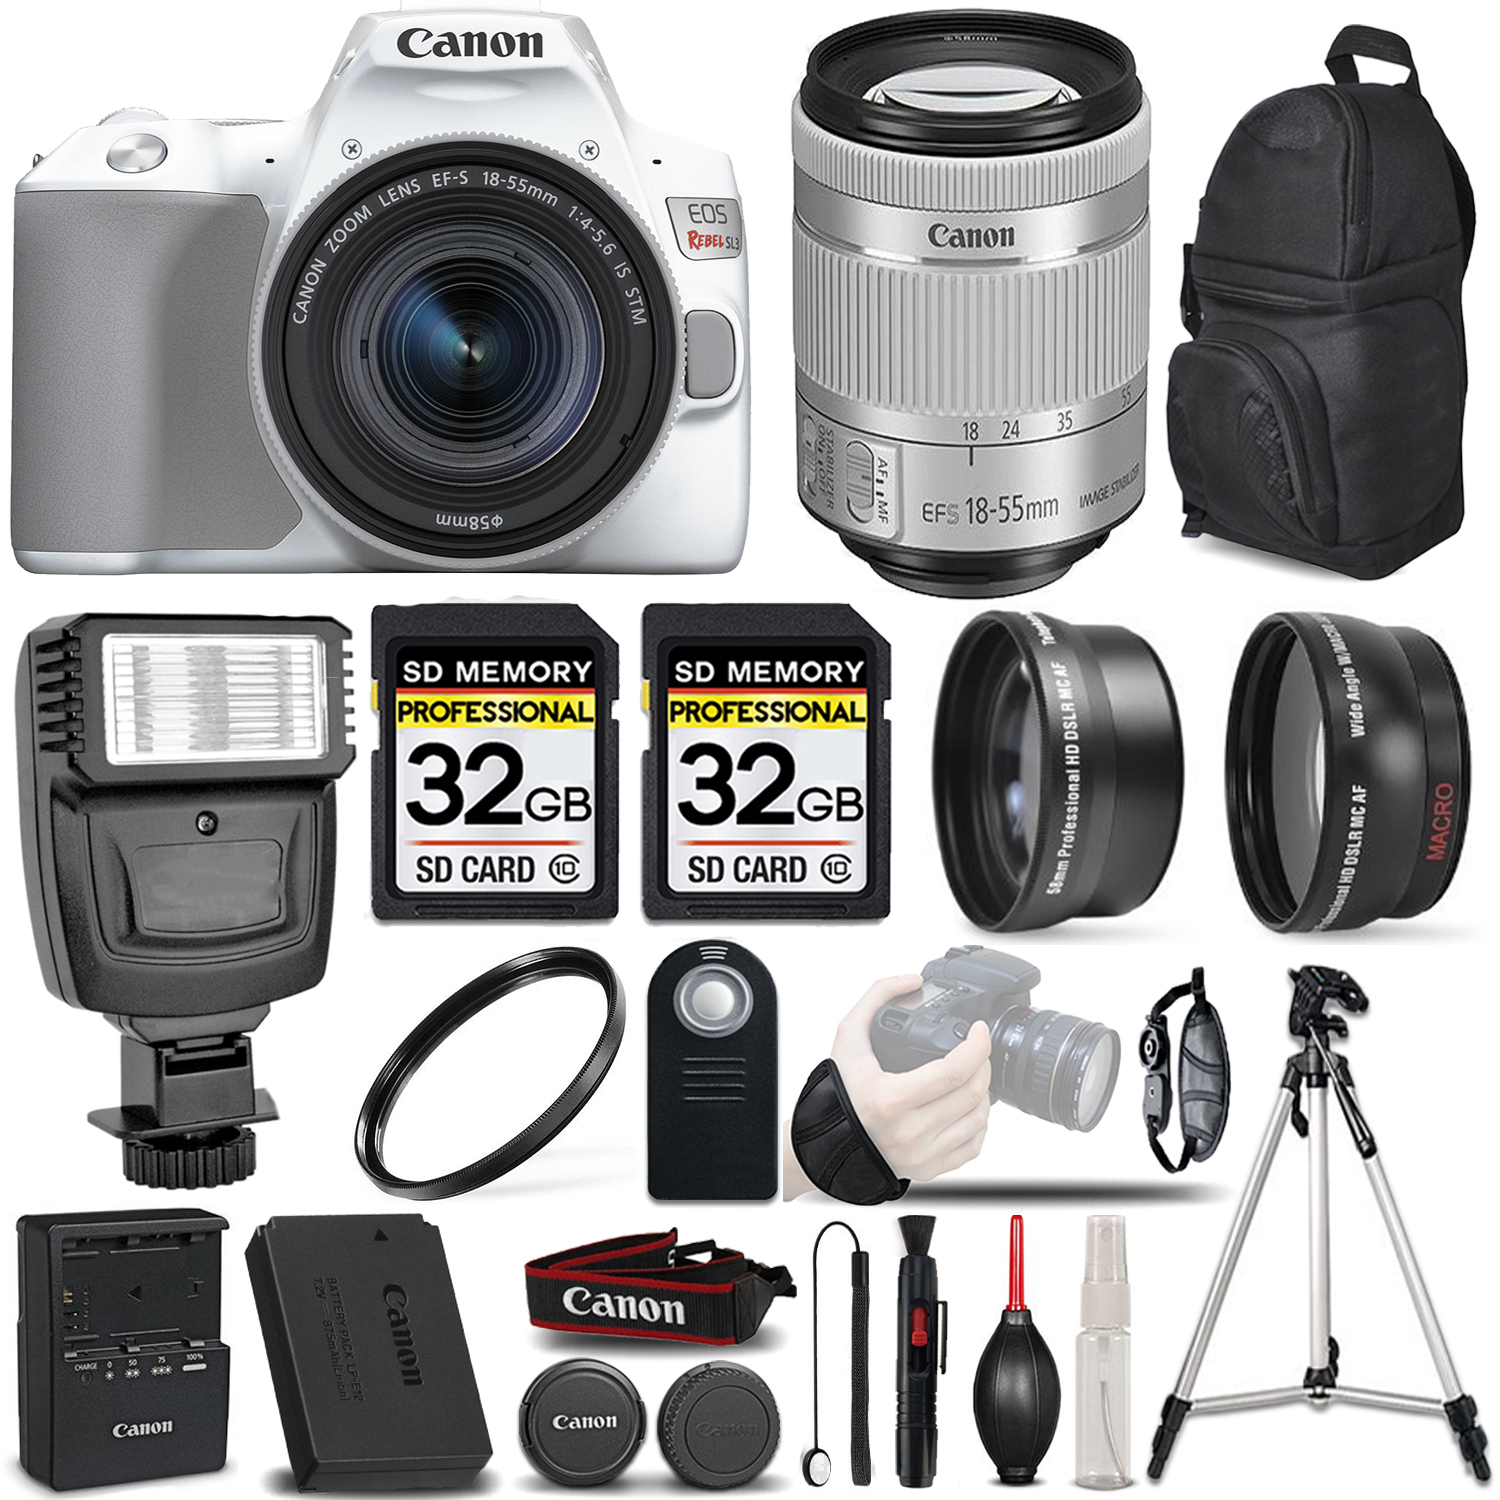 EOS Rebel SL3 DSLR Camera (White) - 3 Lens Kit + 64GB + PRO FLASH *FREE SHIPPING*